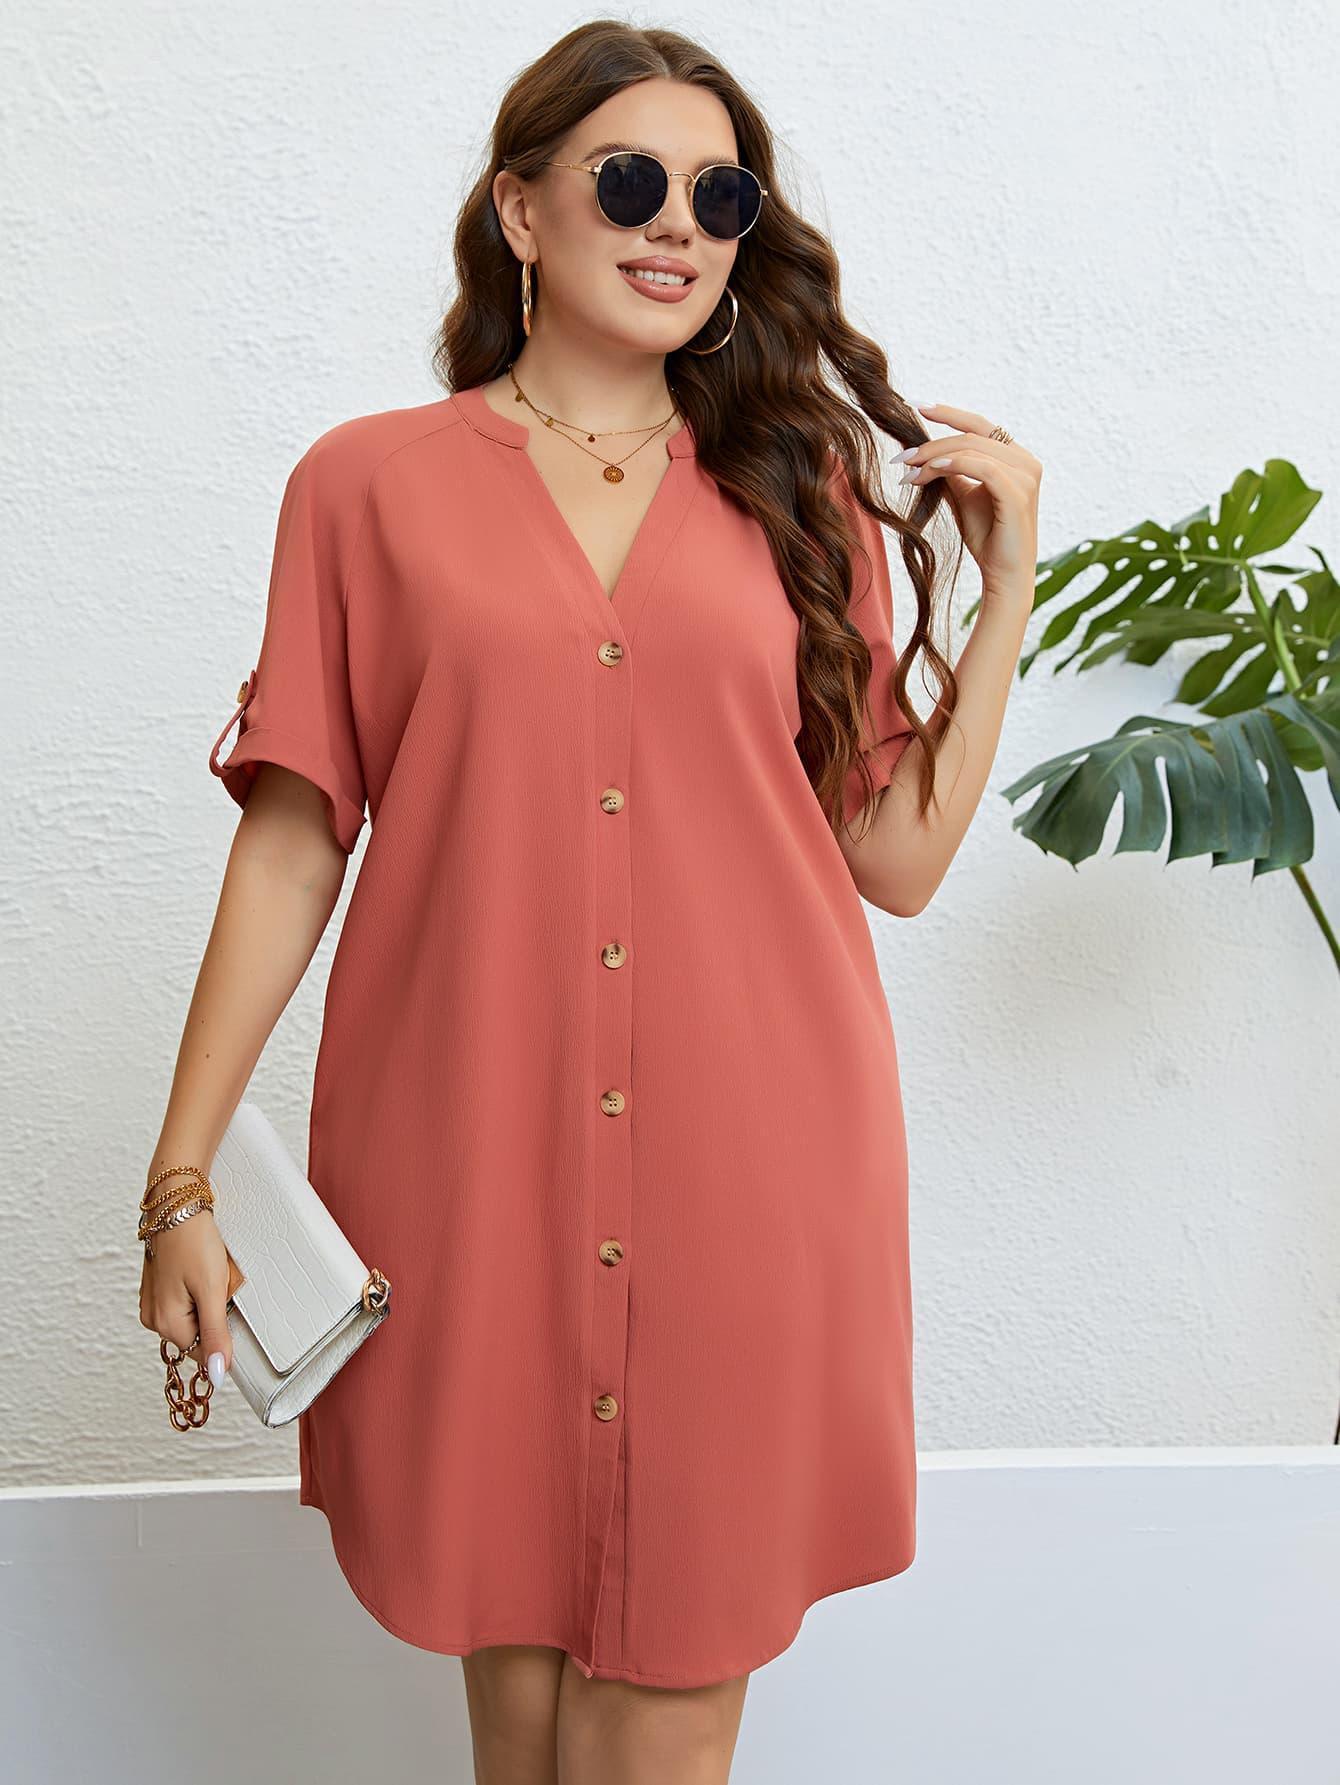 Fabulous Half Sleeve Plus Size Coral Shift Dress - MXSTUDIO.COM